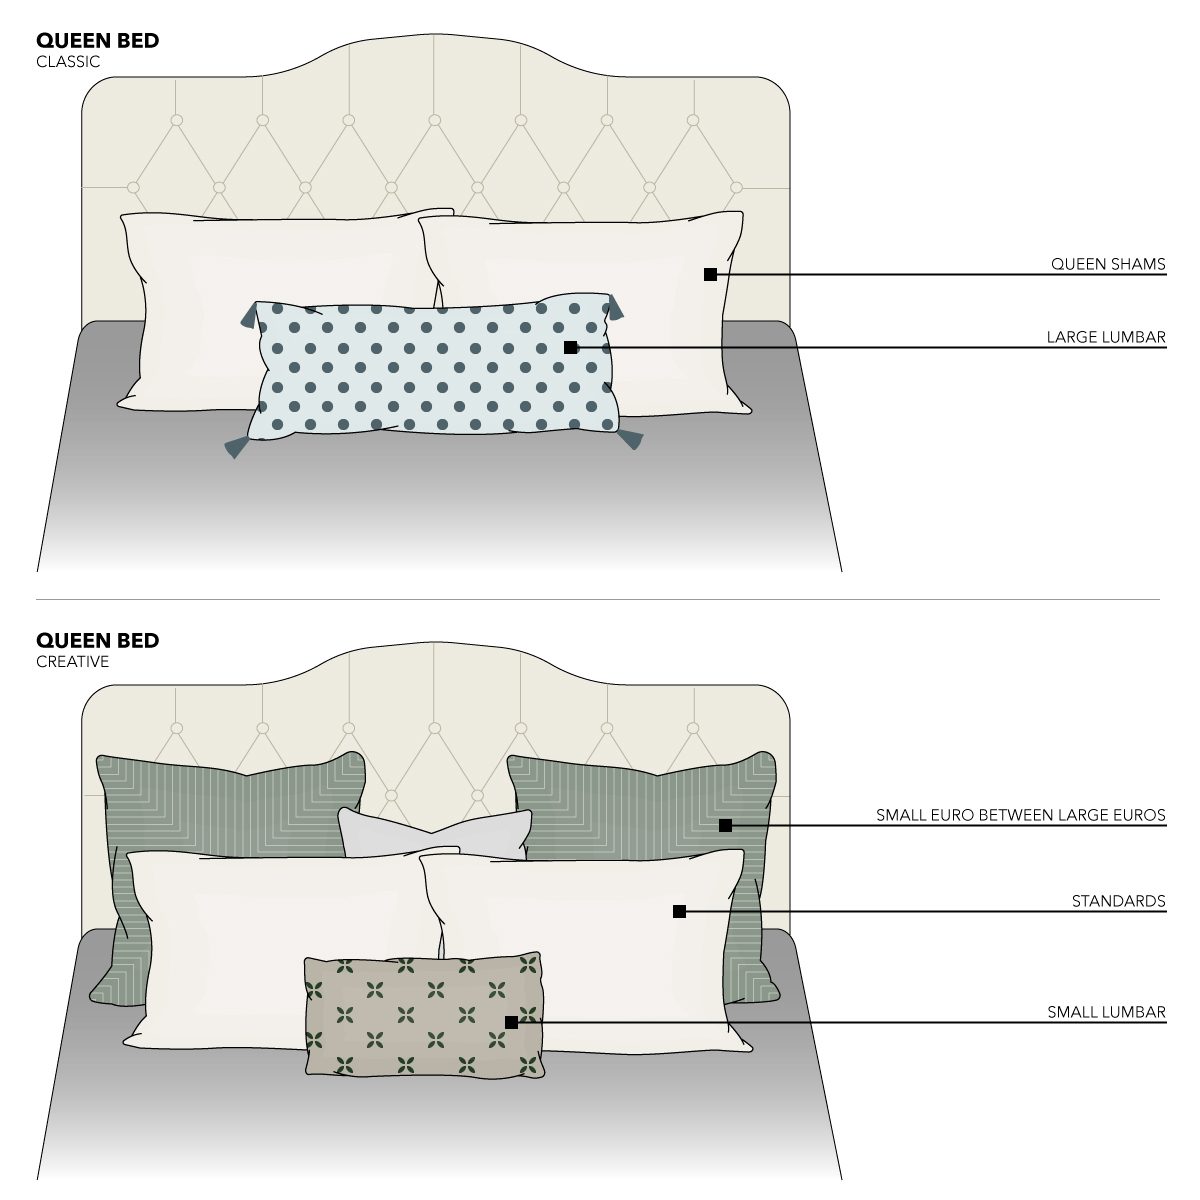 4 Simple king bed pillow arrangement ideas